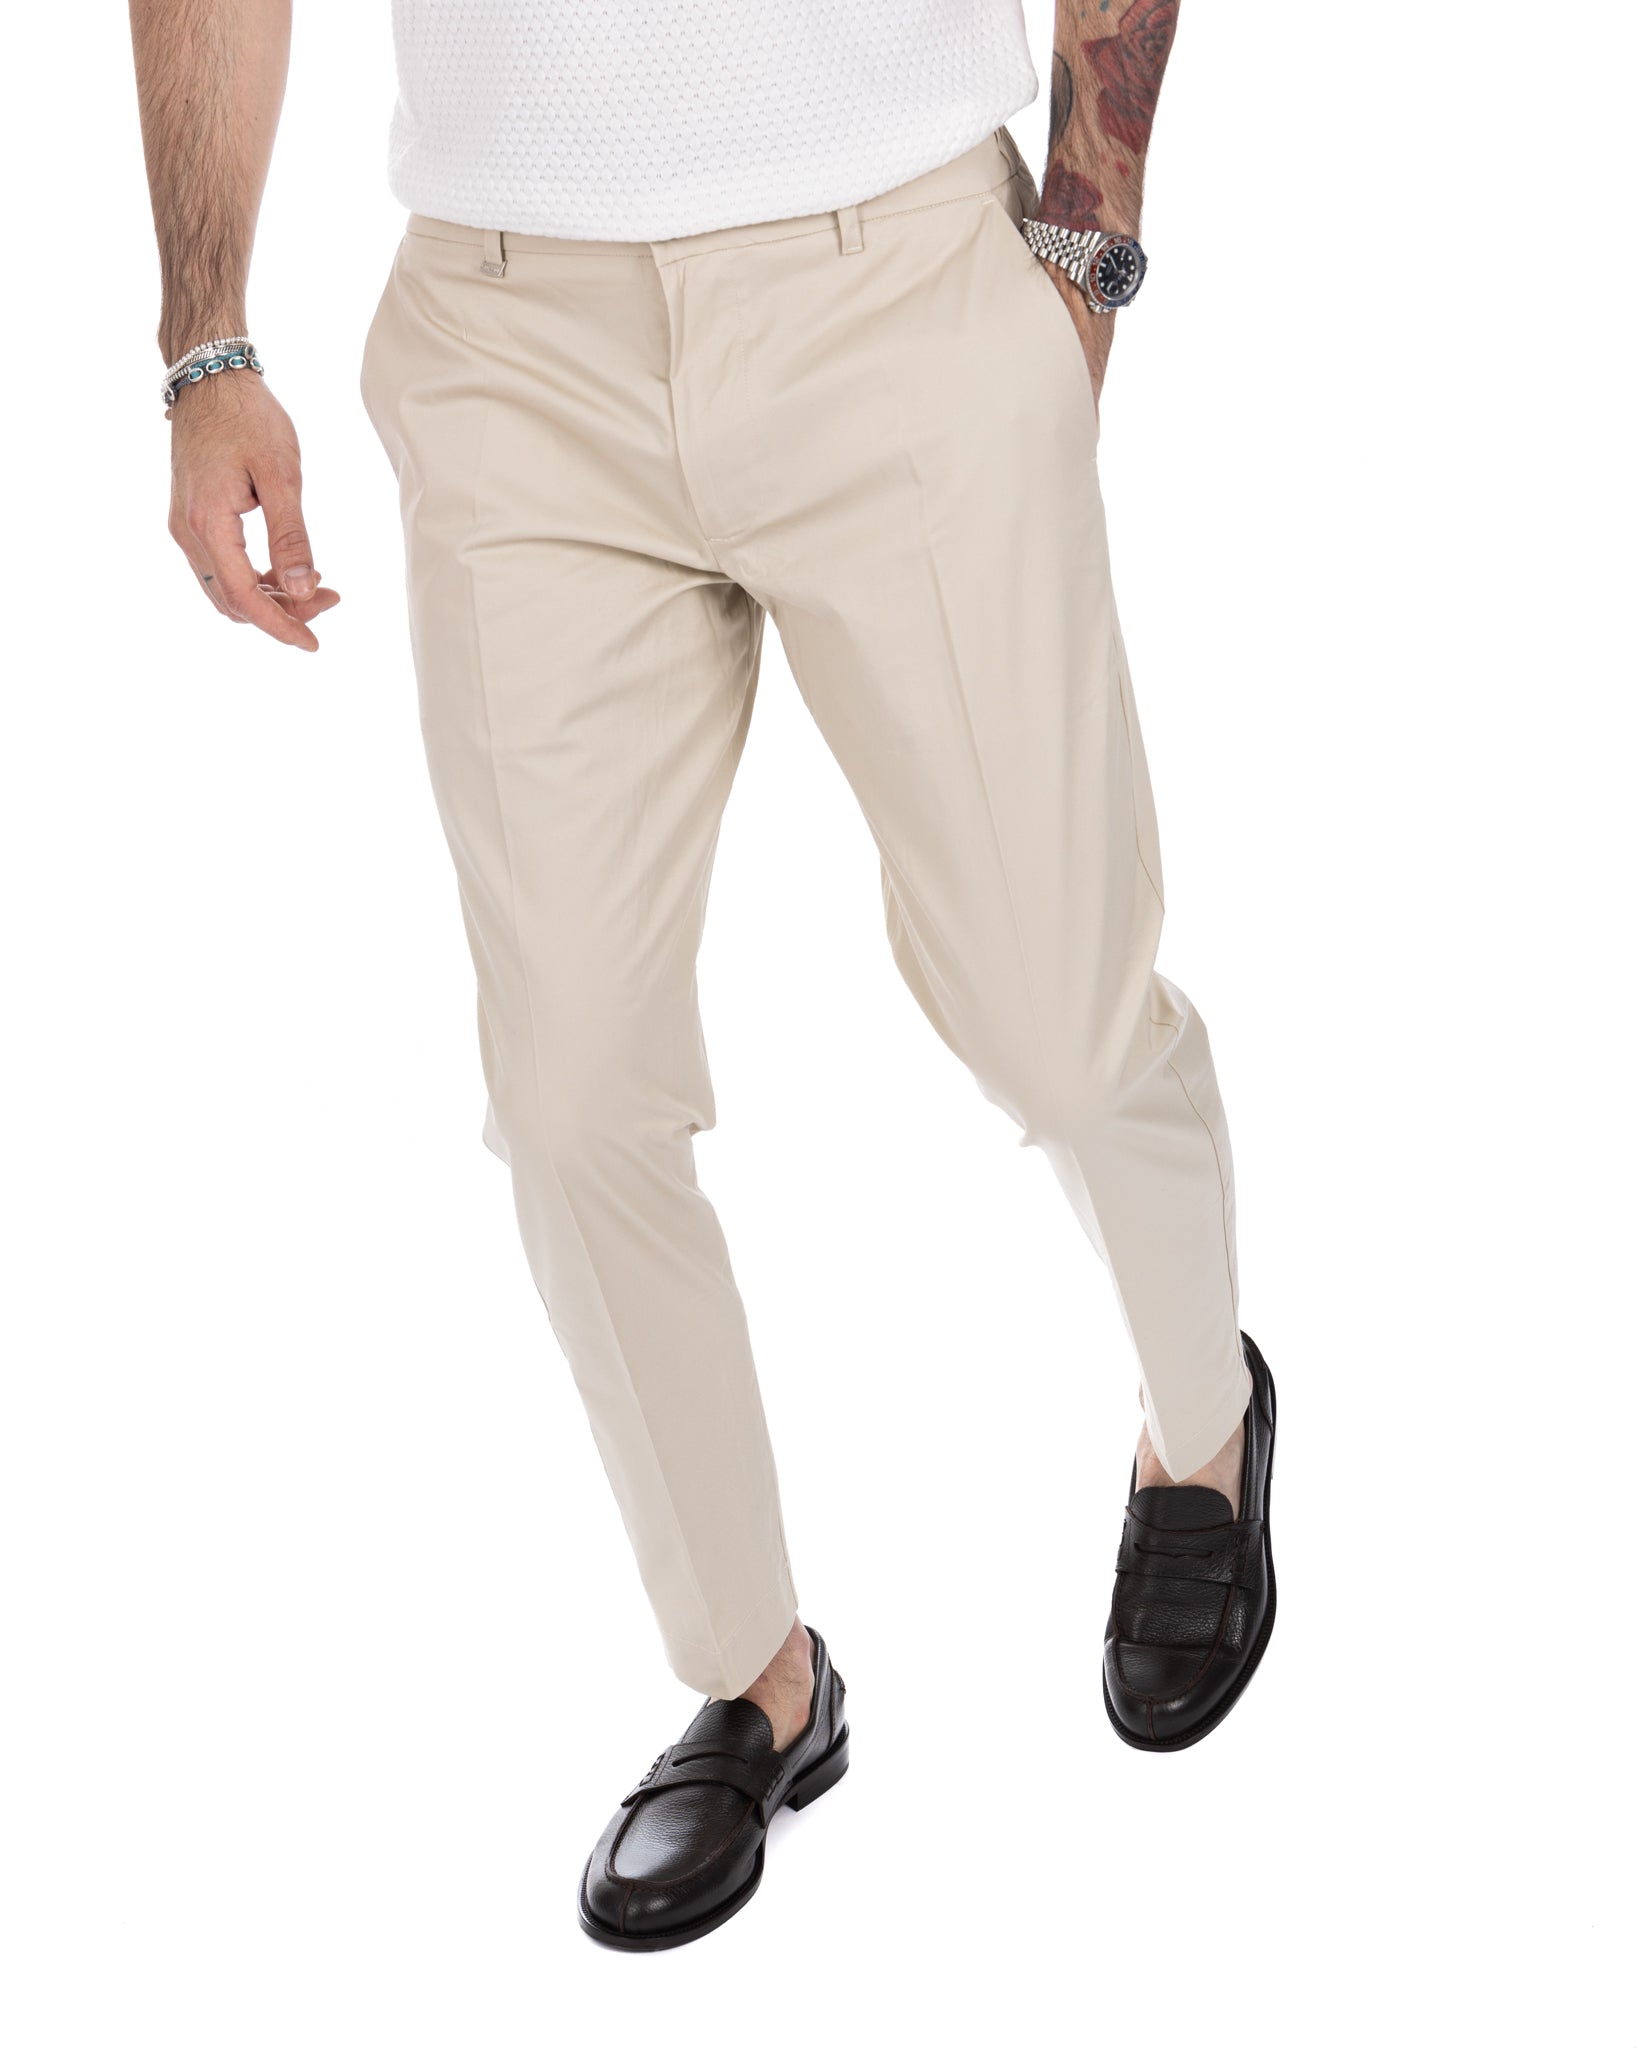 Elder - pantalone capri beige in cotone estivo